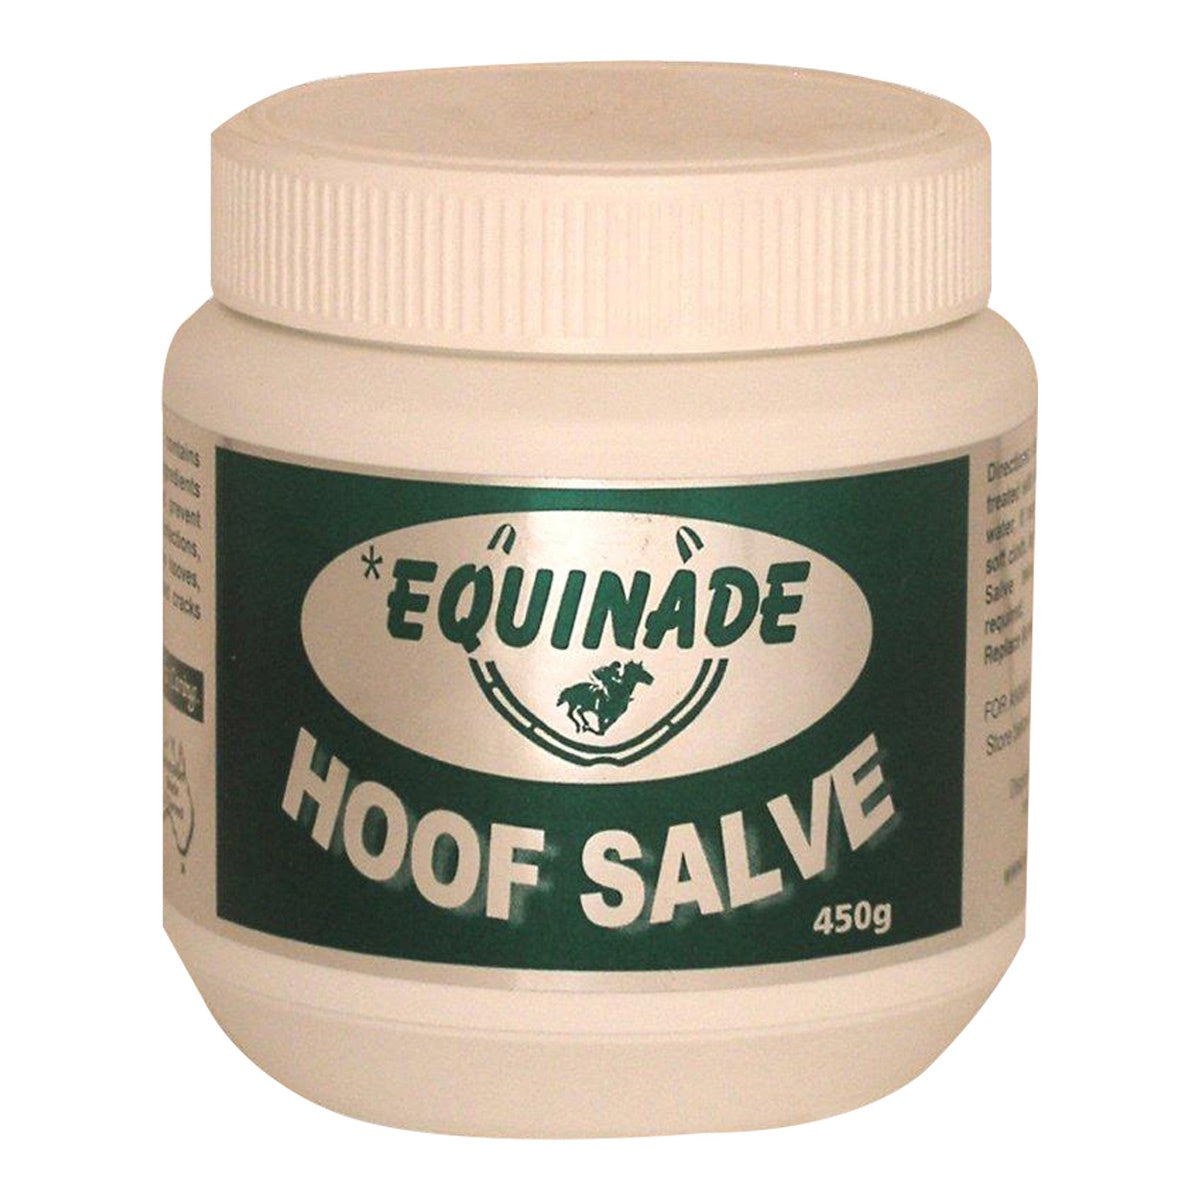 Equinade Hoof Salve 450g (6613049114701)